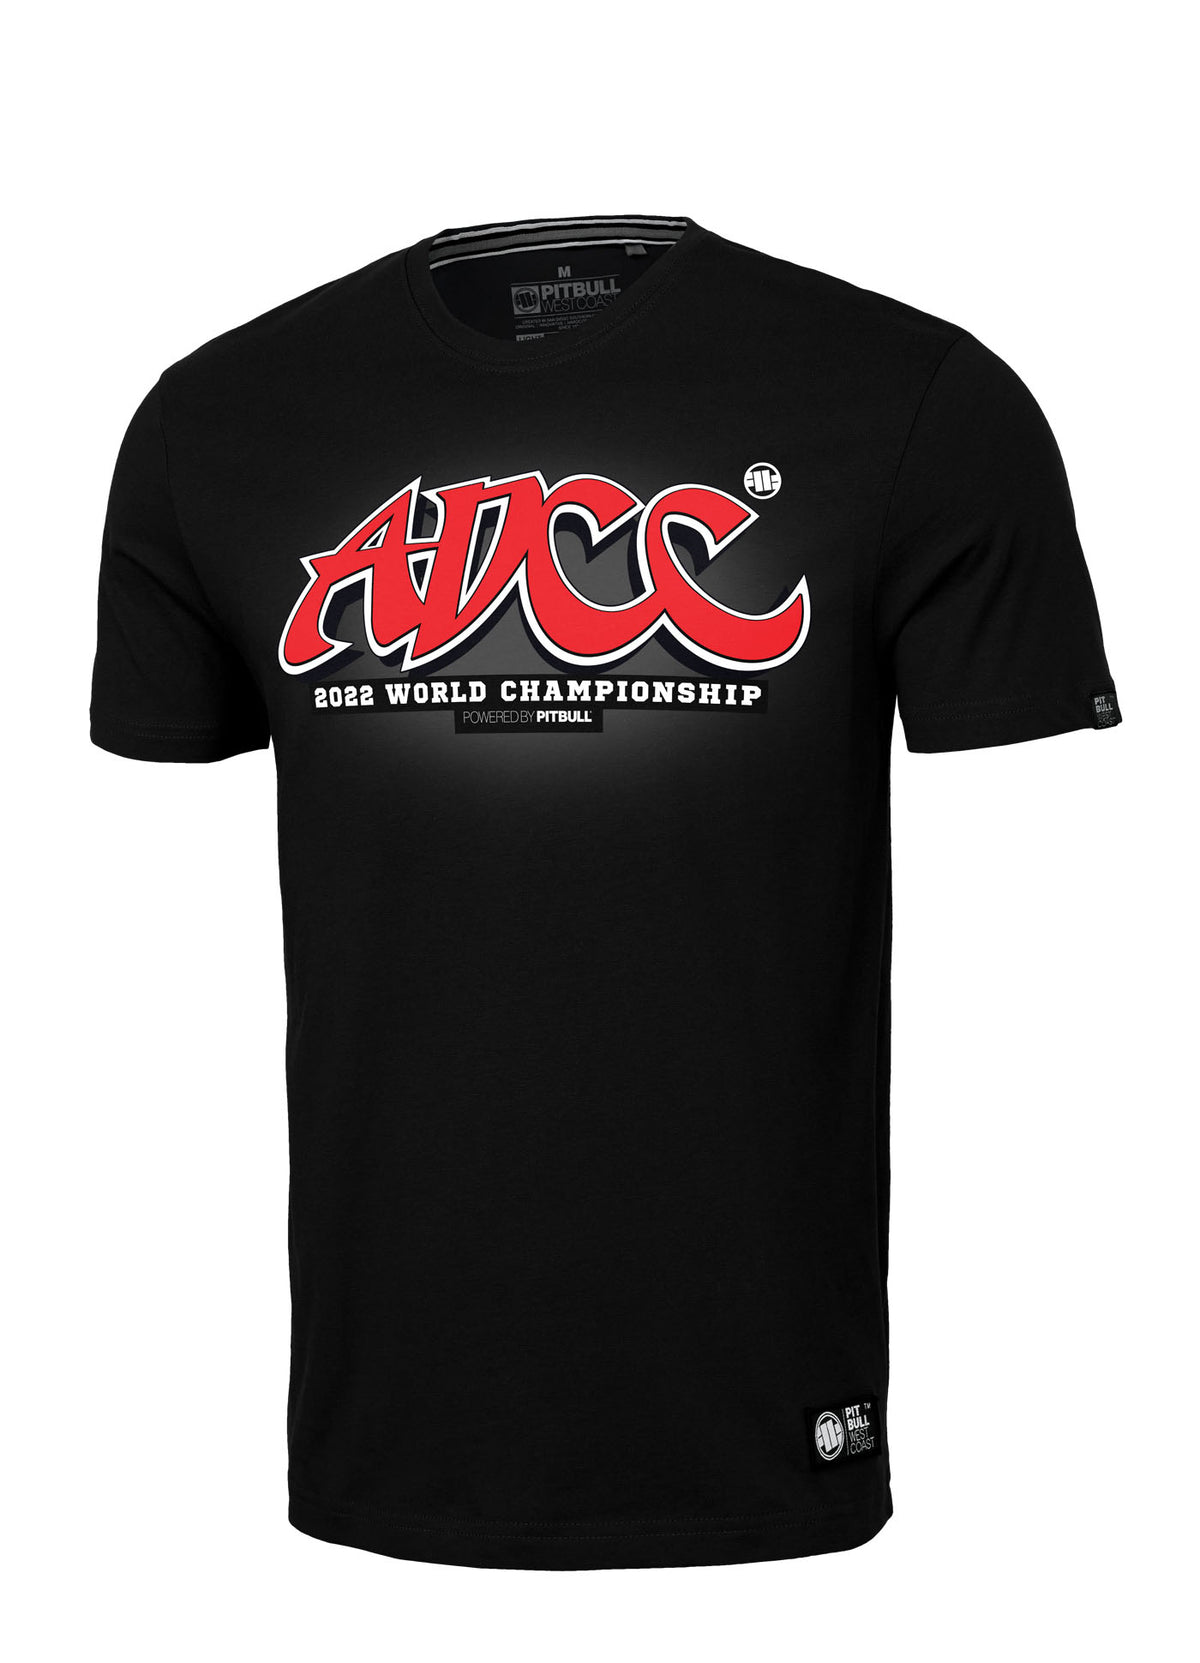 ADCC CHAMPIONSHIP 2022 BASIC Black T-shirt - Pitbull West Coast International Store 